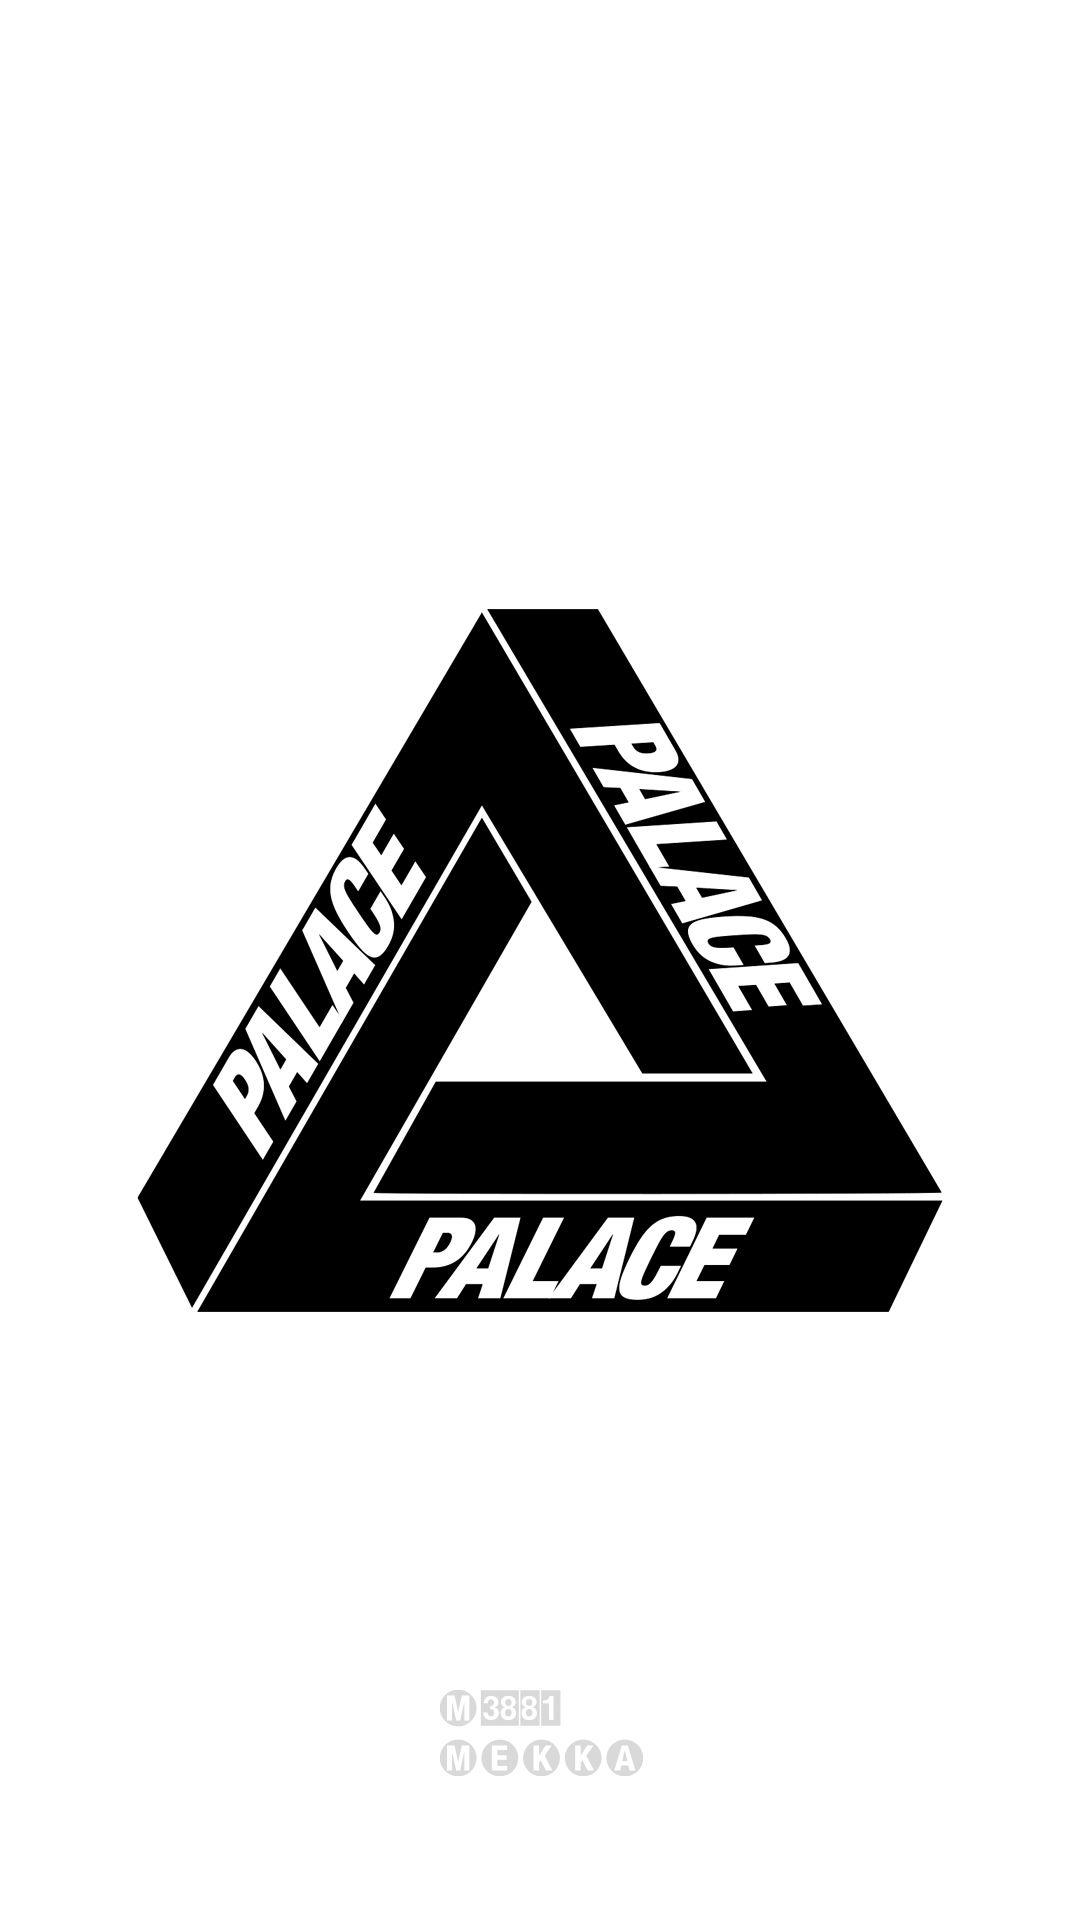 Palace Clothes Logo - Palace Skateboards [M]